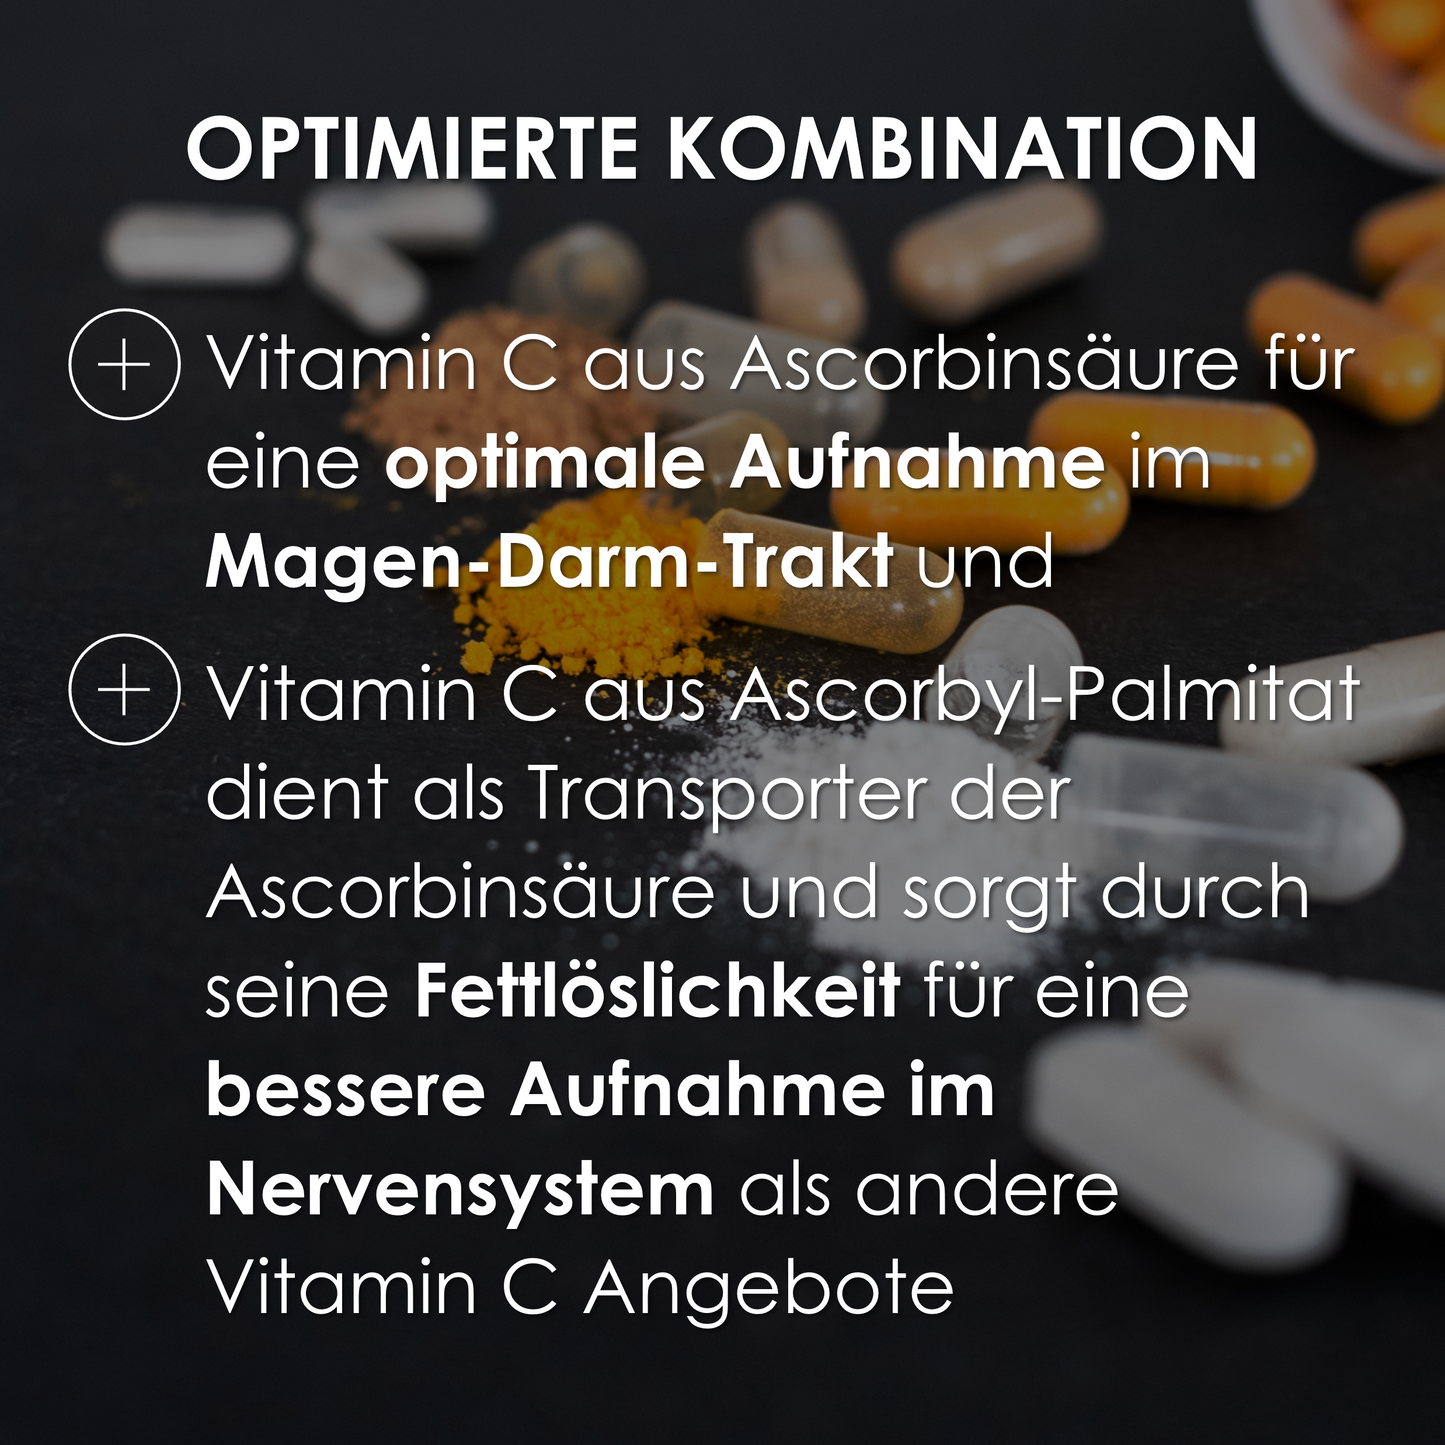 vitamin c - 2 Formen